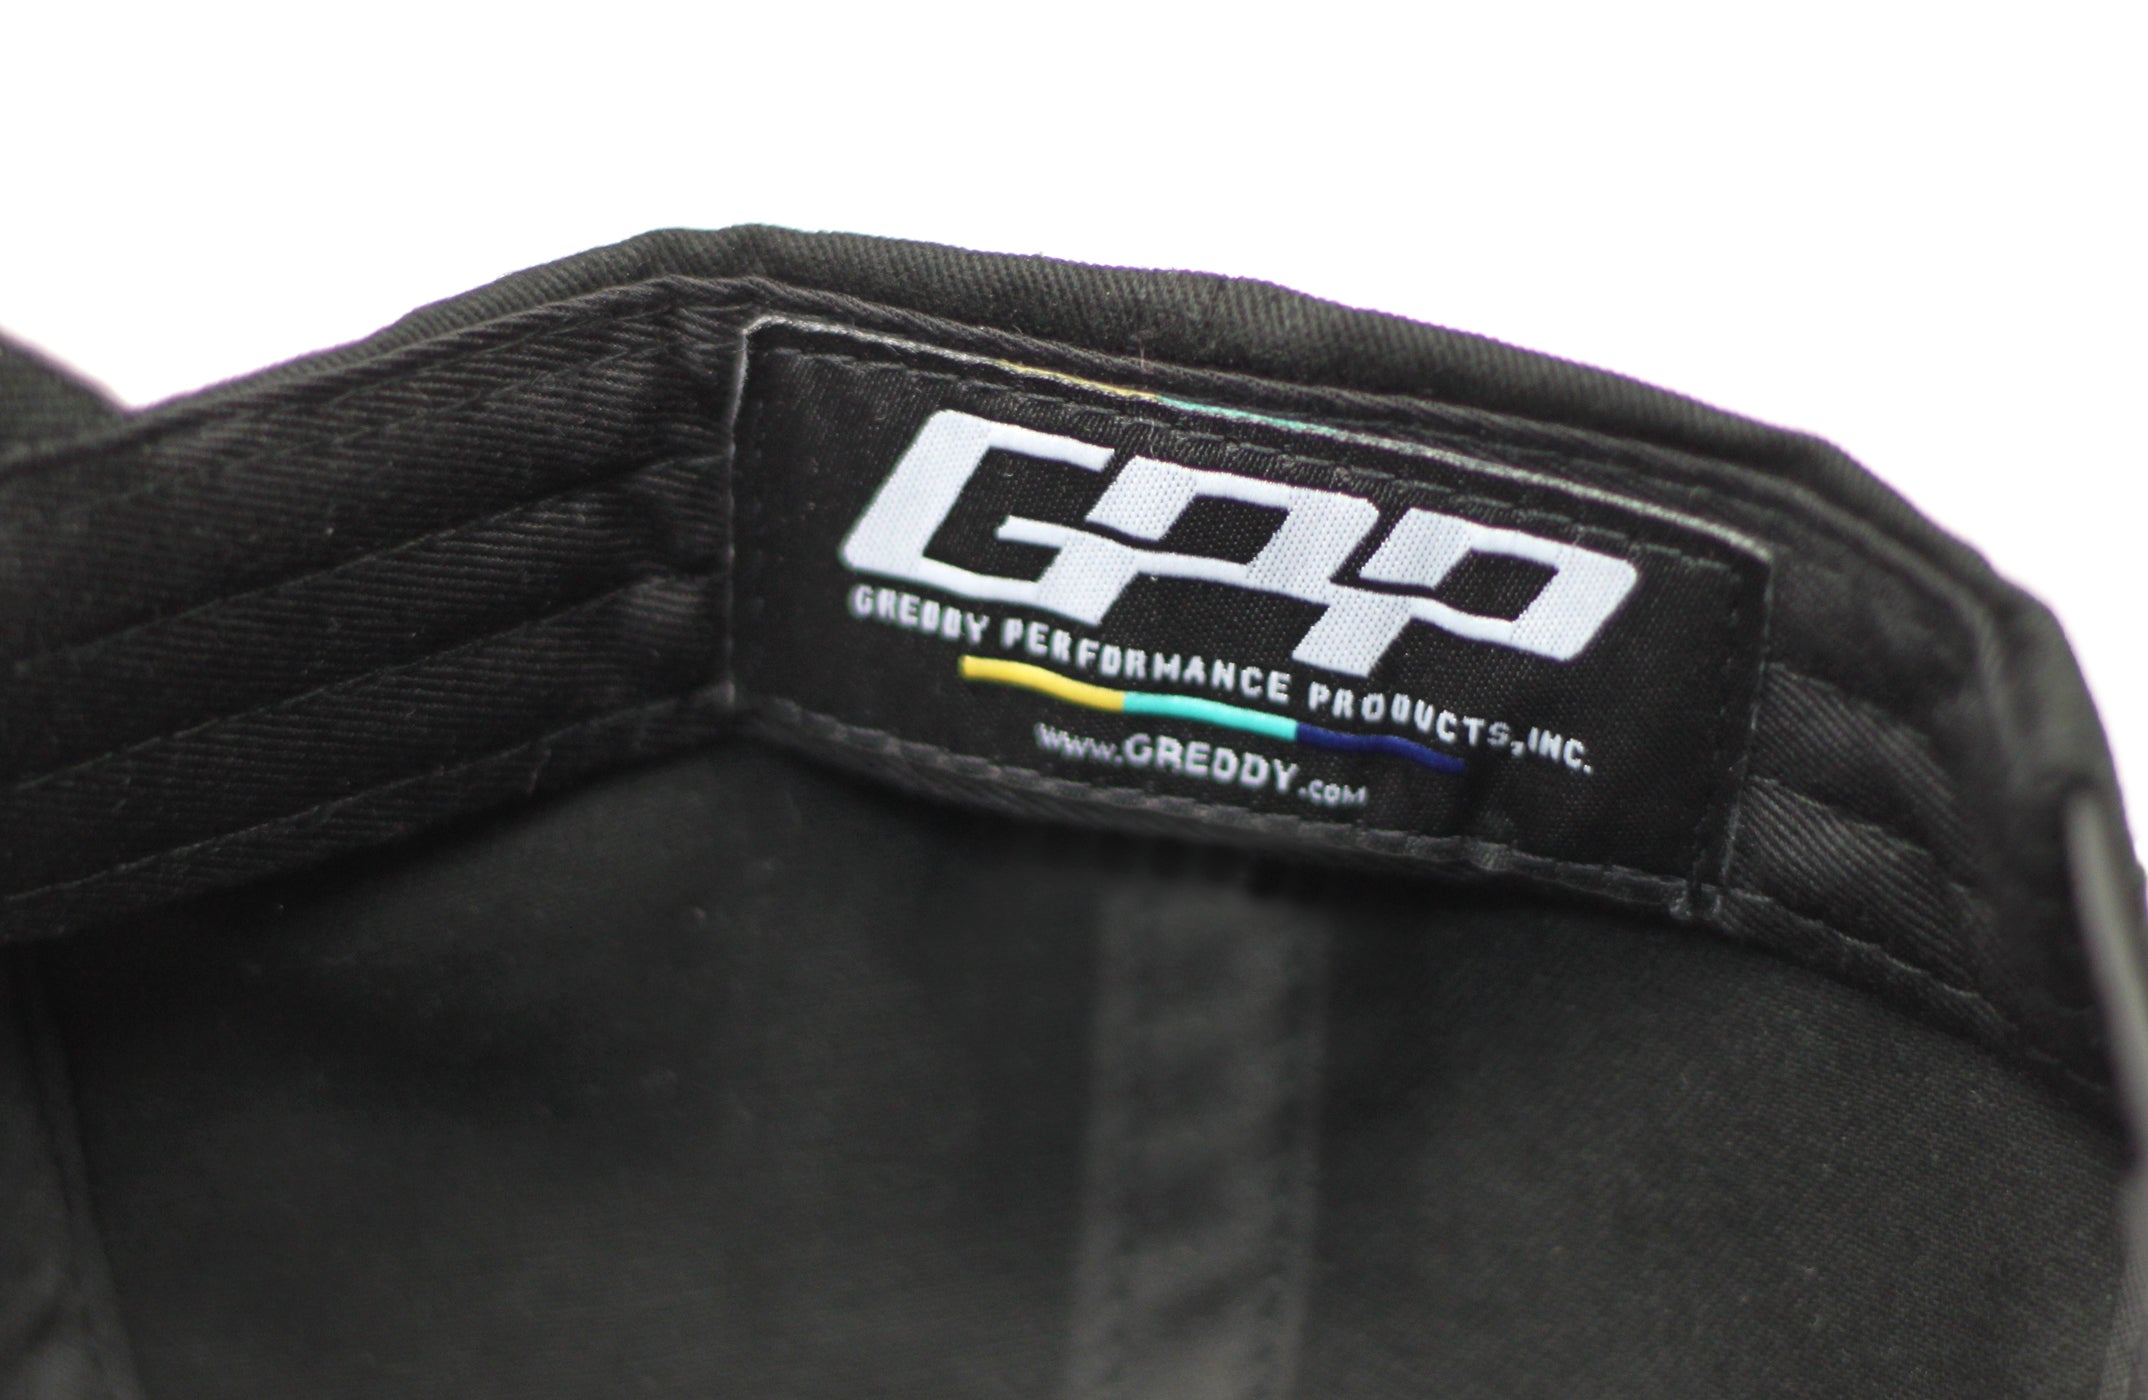 GPP "G" Soft Structure Cap - Black